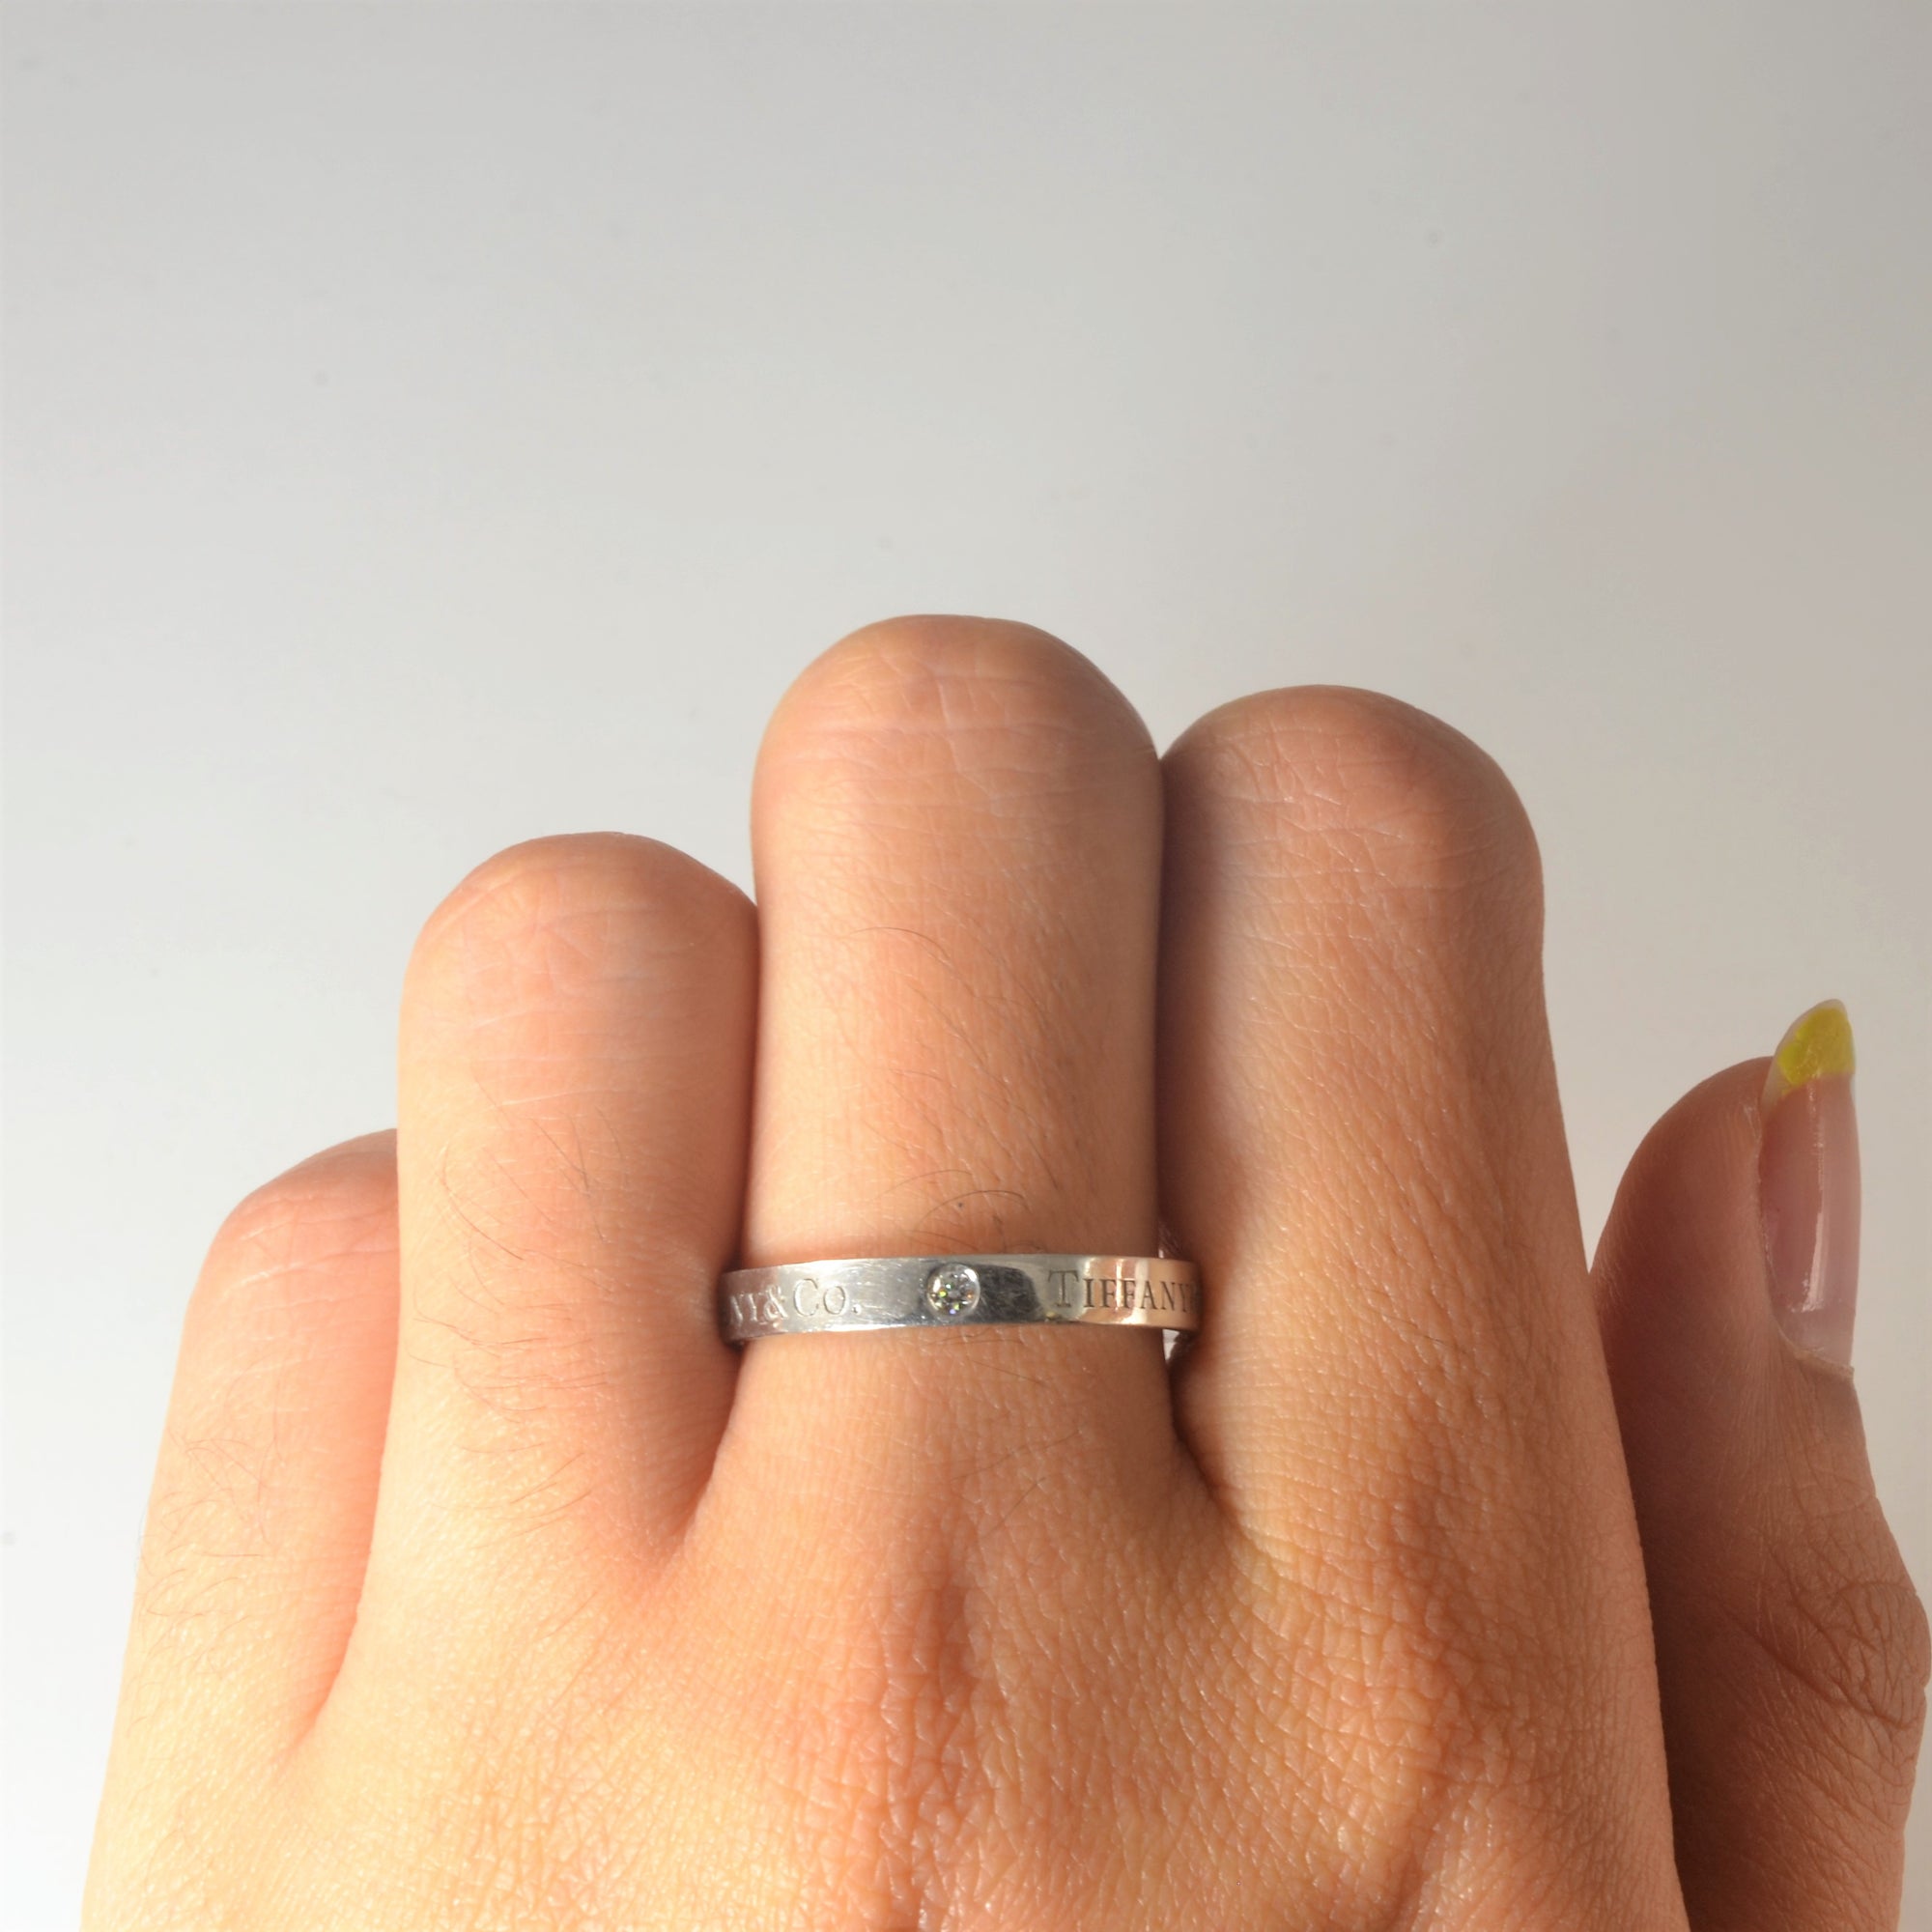 'Tiffany & Co.' Diamond Band Ring | 0.15ctw | SZ 8.25 |